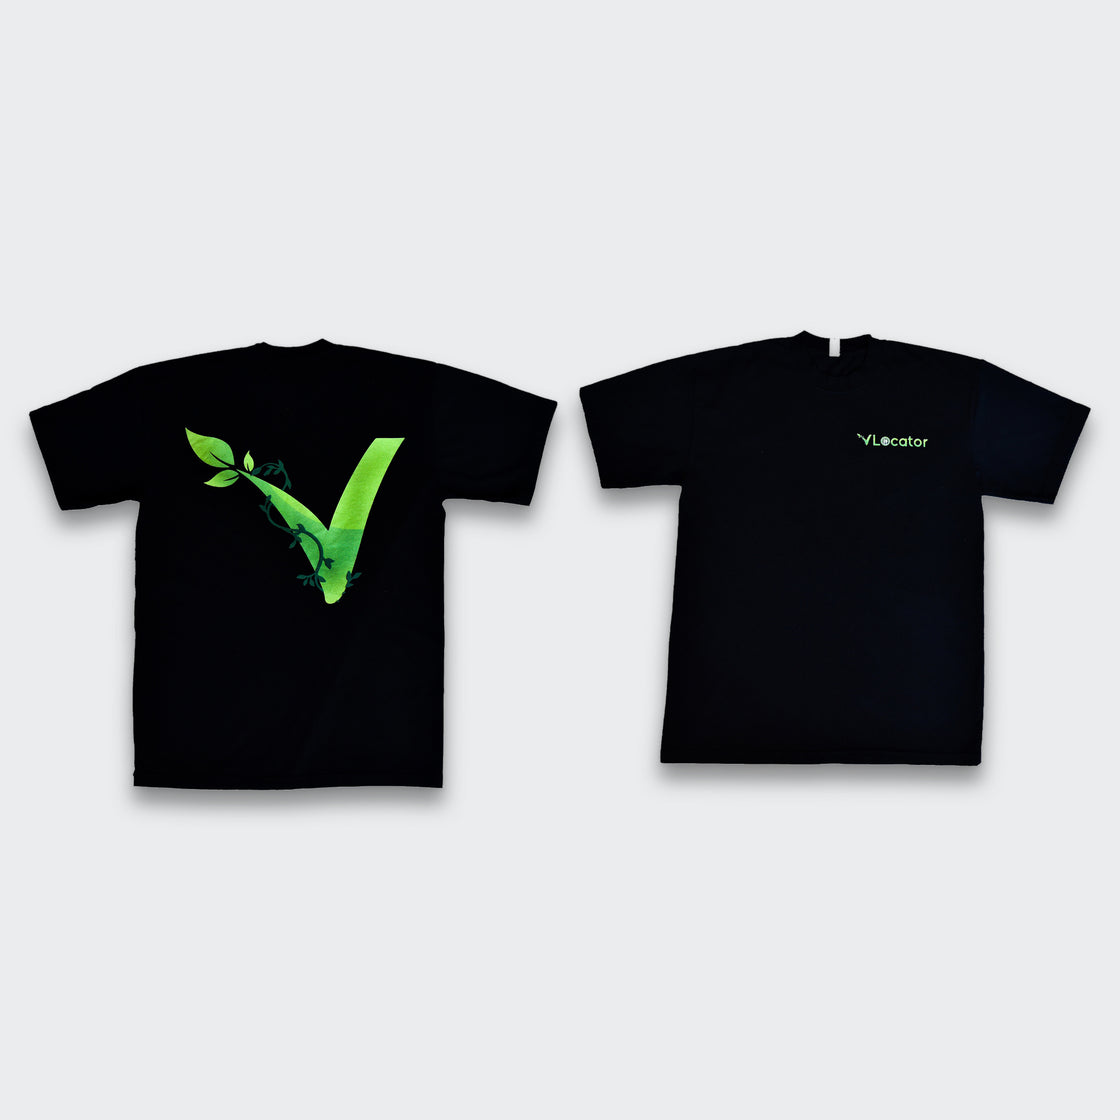 Black V Locator  T-shirt